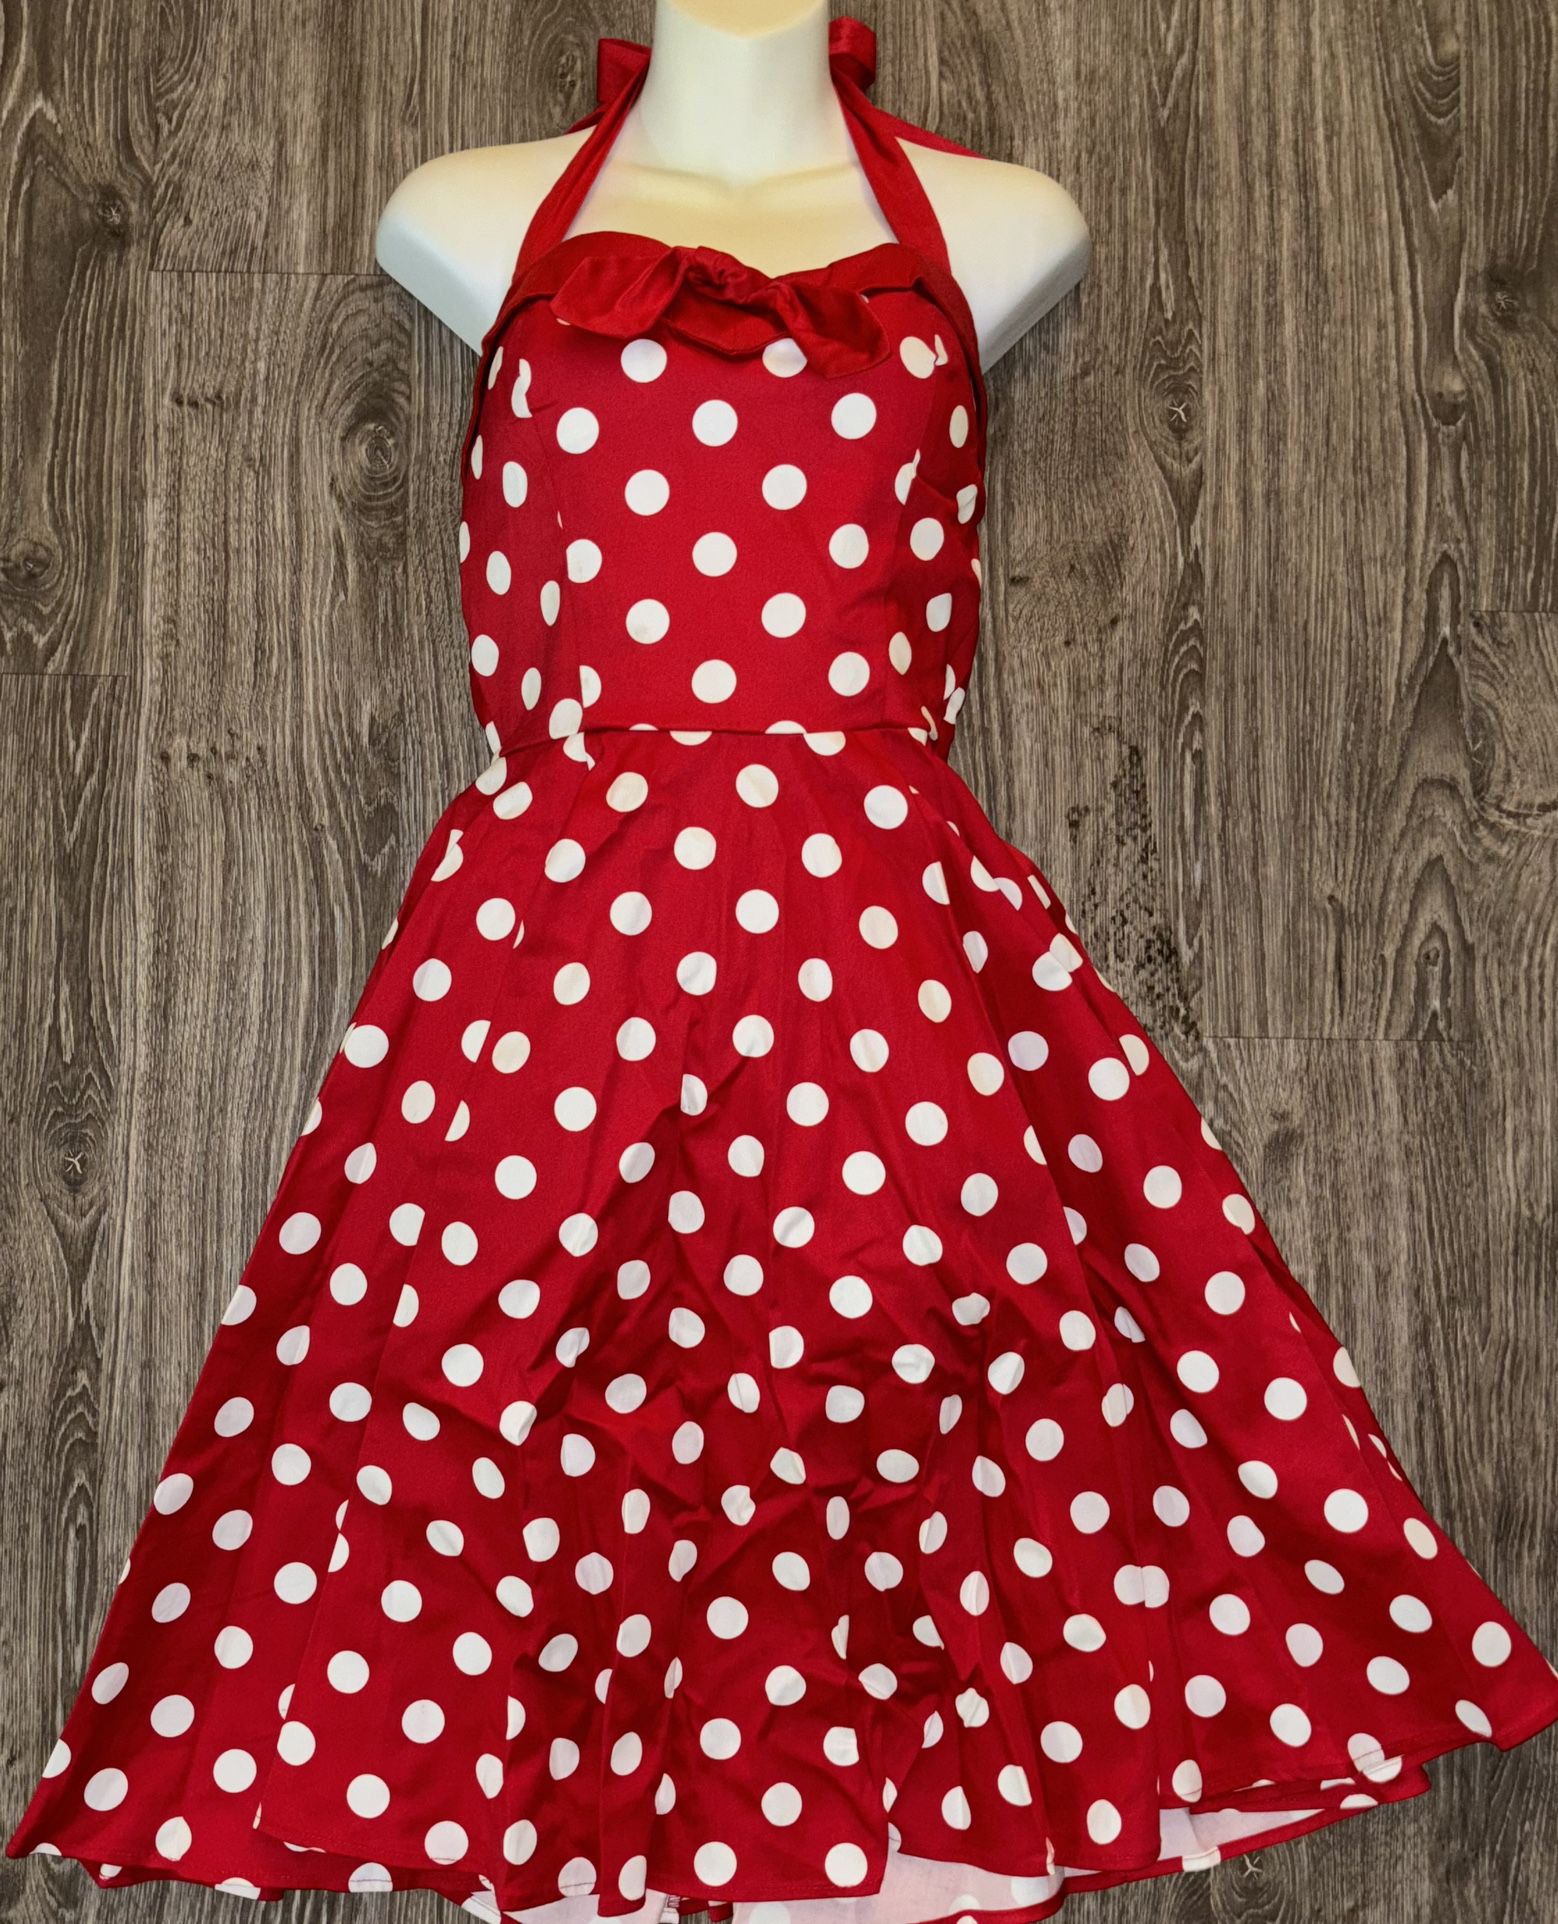 Sidecca 1950s Vintage Style Pinup Polka Dot Dress